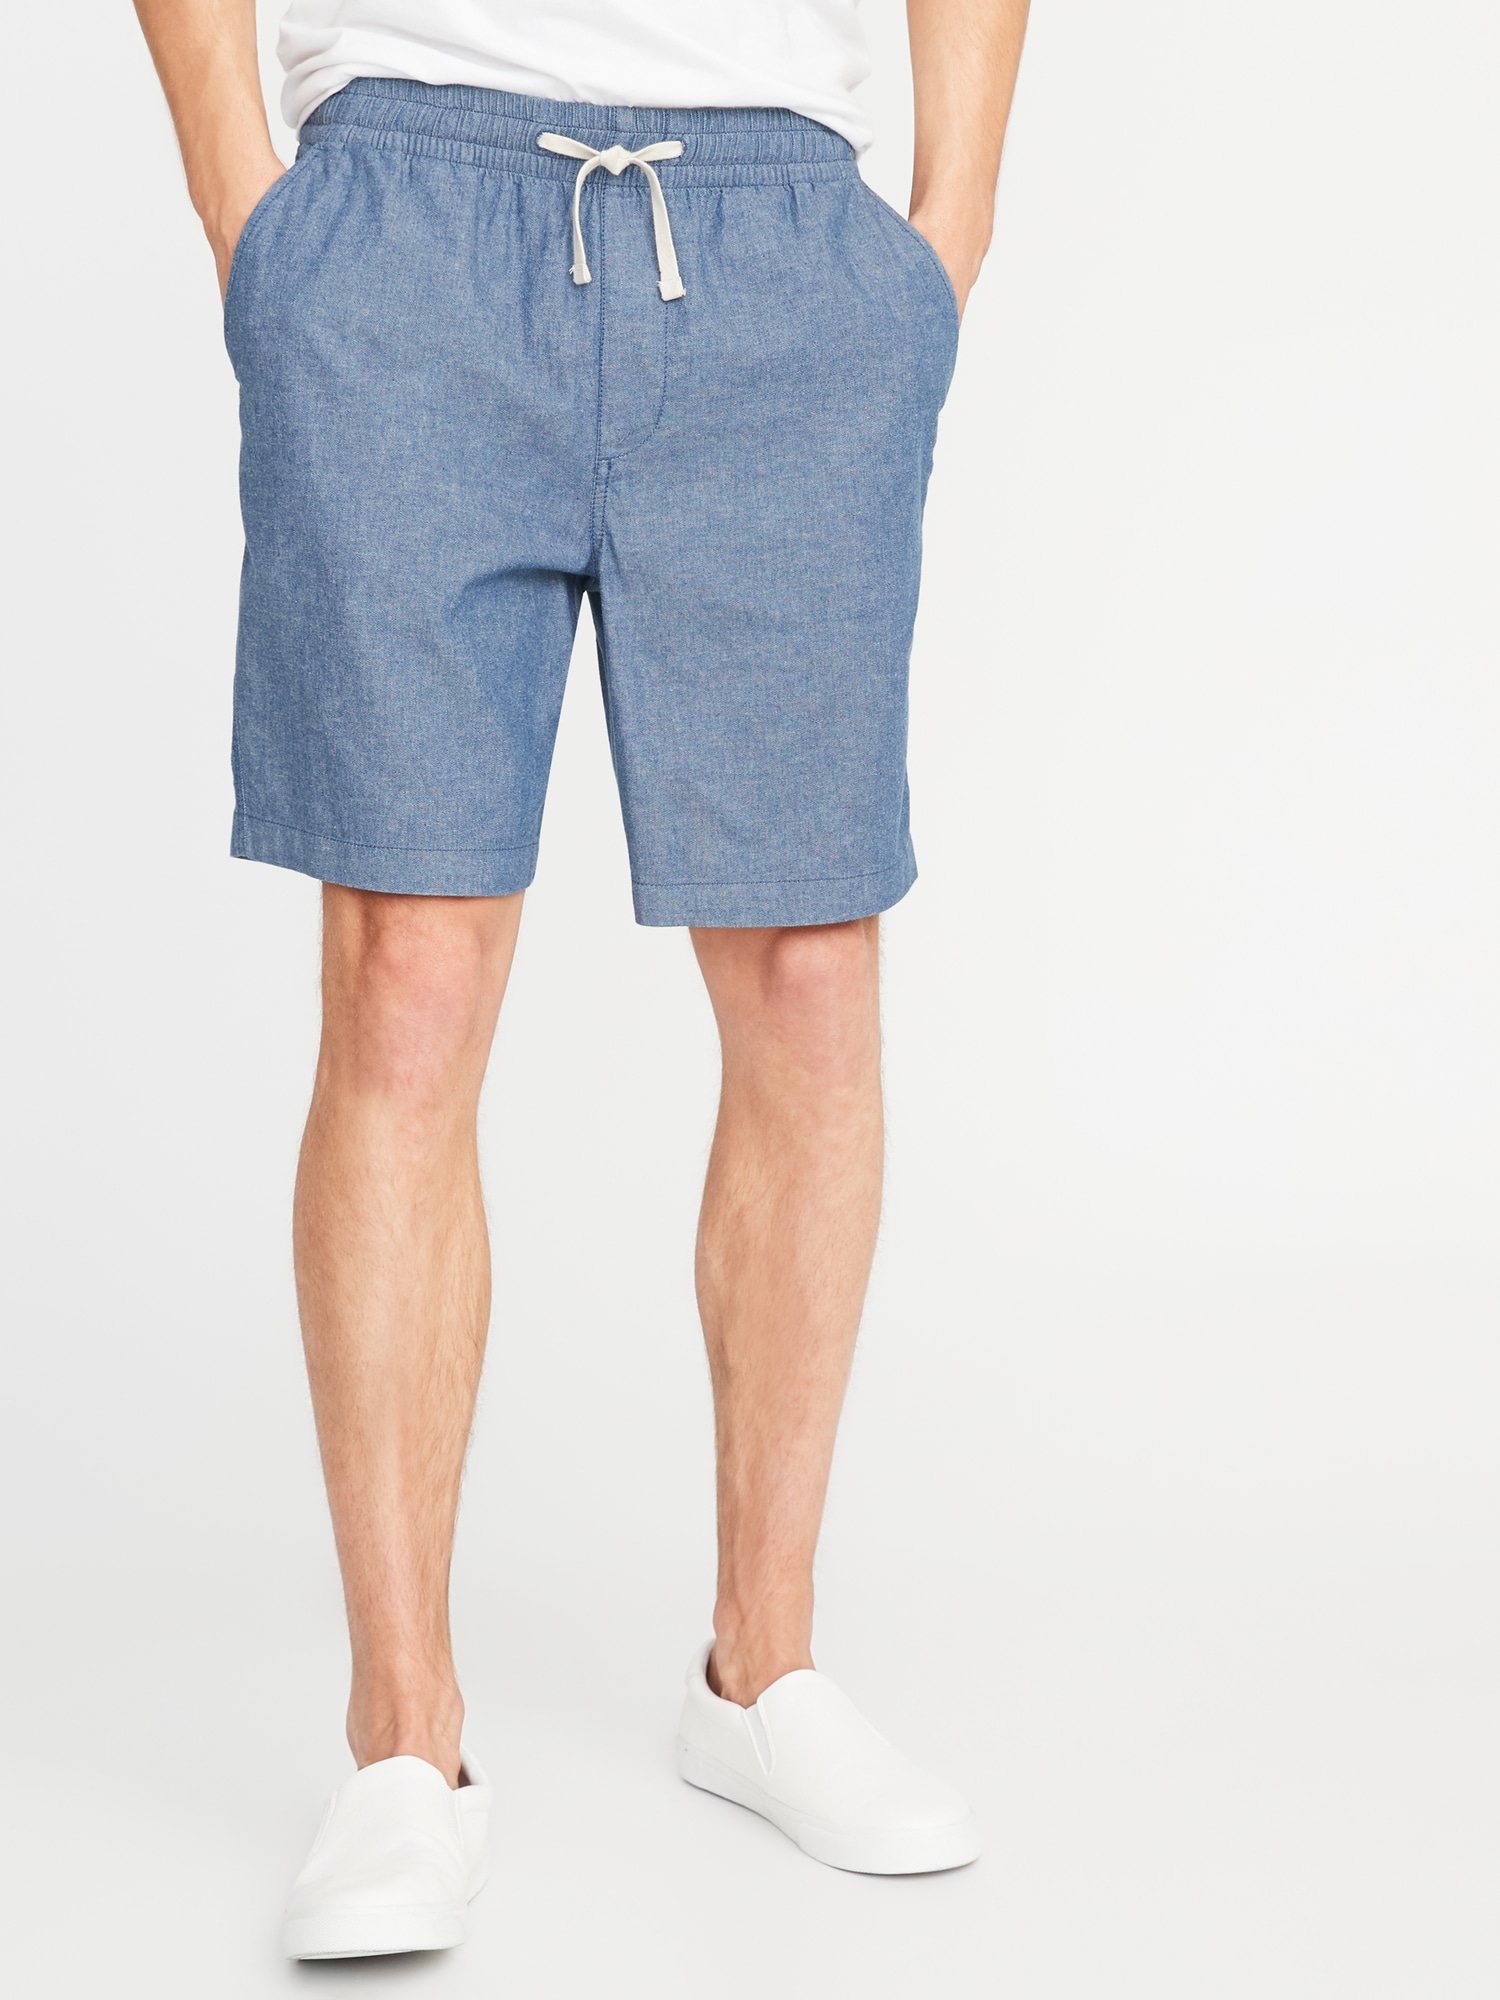 navy jogger shorts